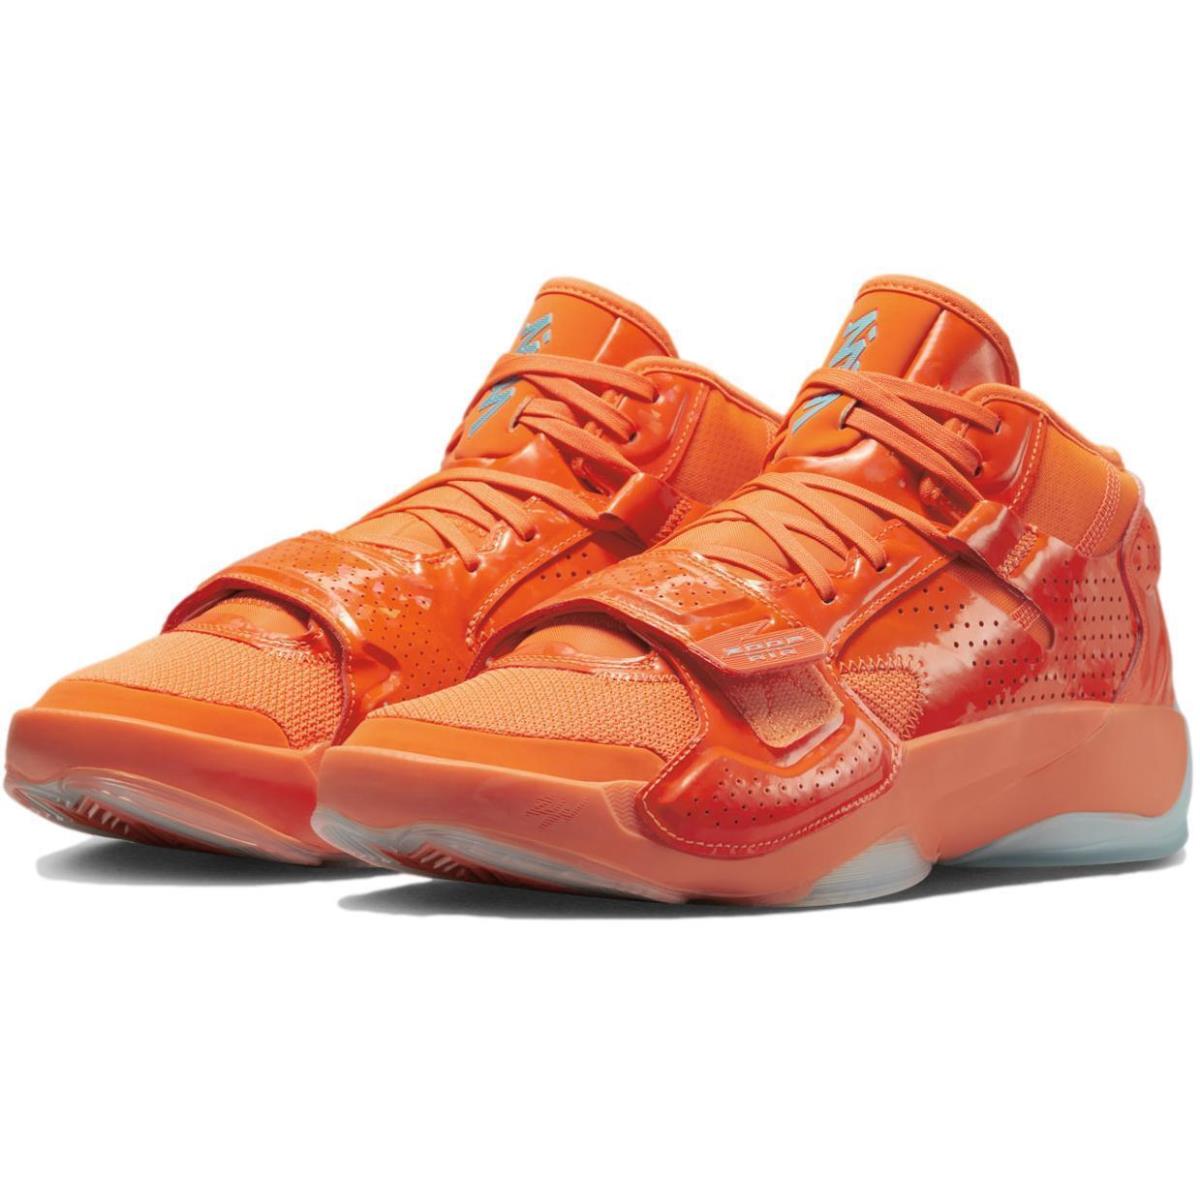 Nike Jordan Zion 2 `hyper Crimson` Men`s Basketball Shoes DX5423-841 - Hyper Crimson